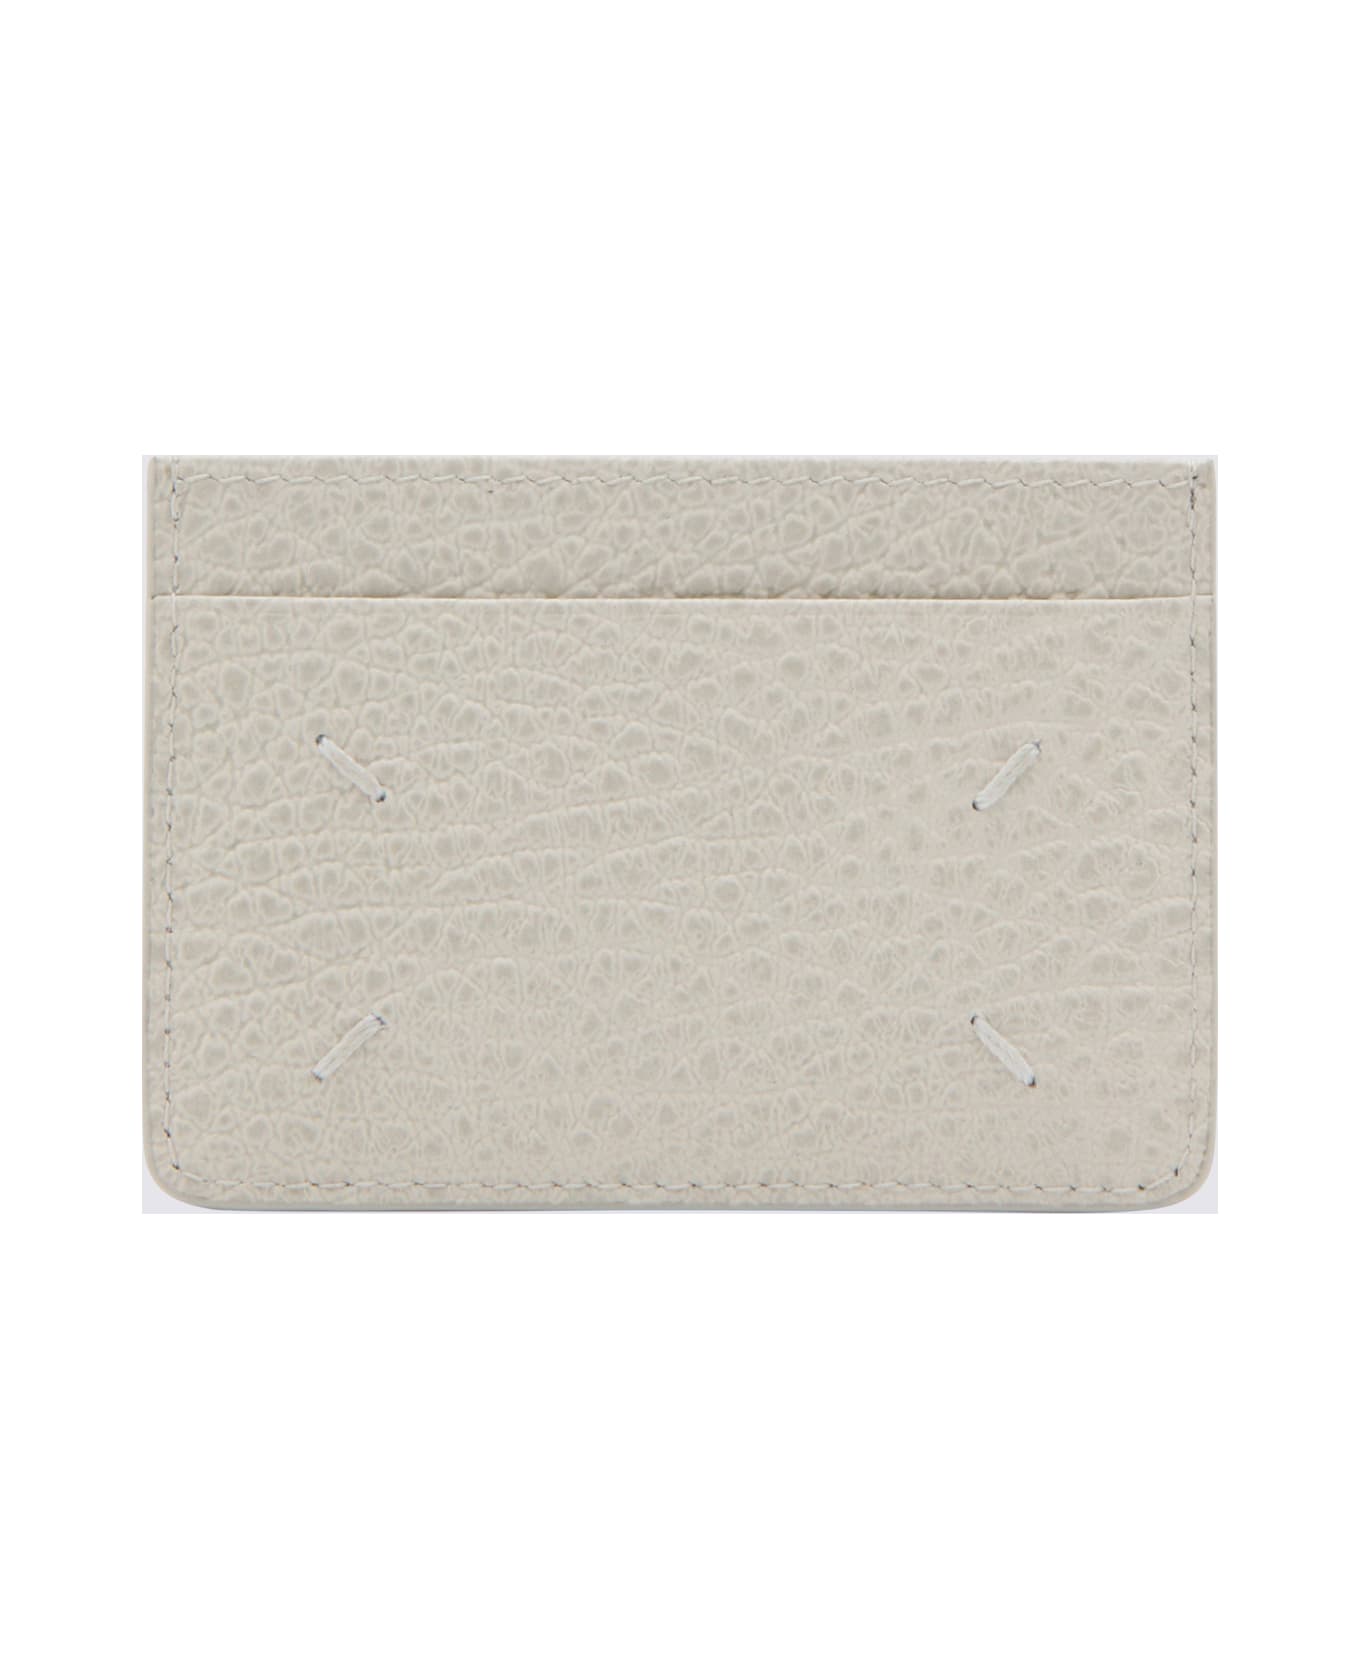 Maison Margiela Greige Leather Card Holder - GREIGE